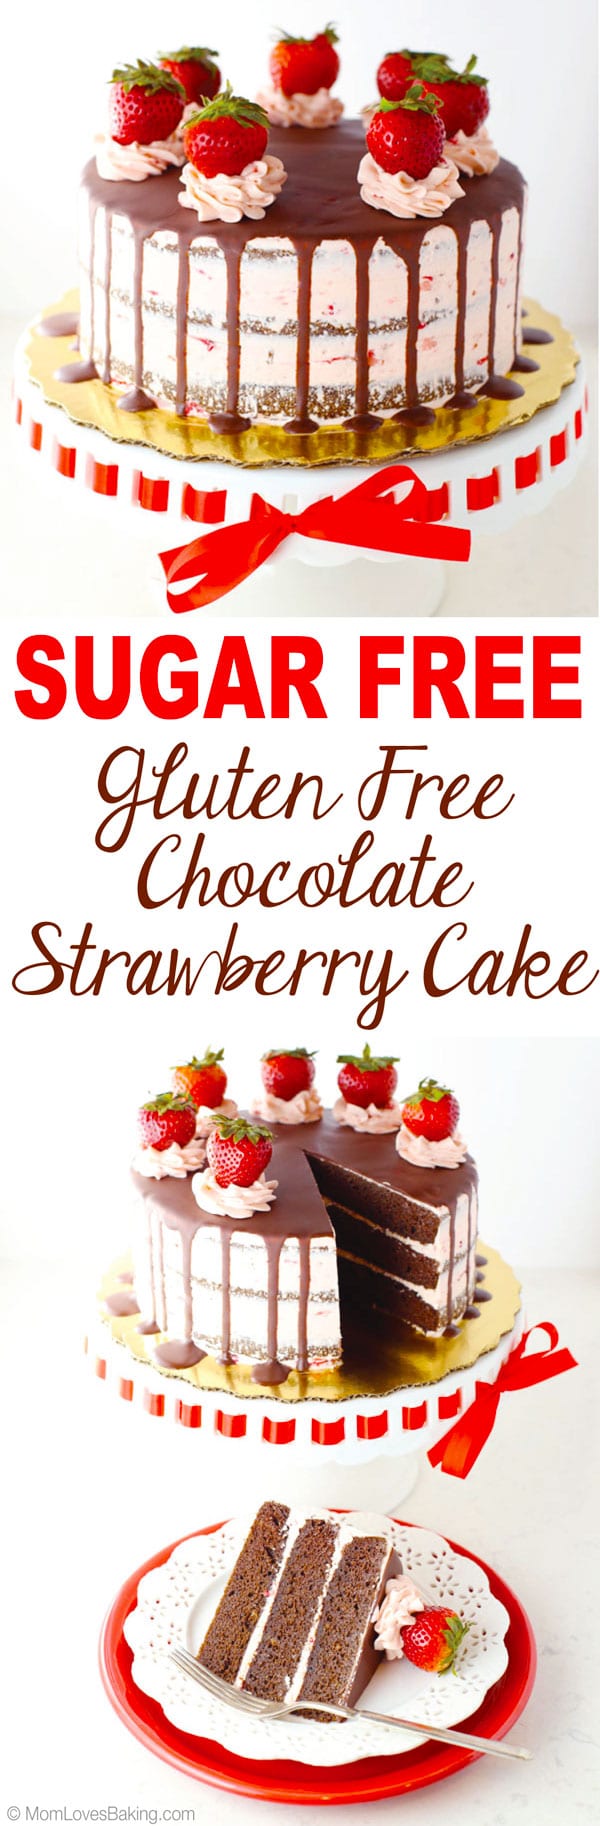 Sugar Free Gluten Free Chocolate Strawberry Cake